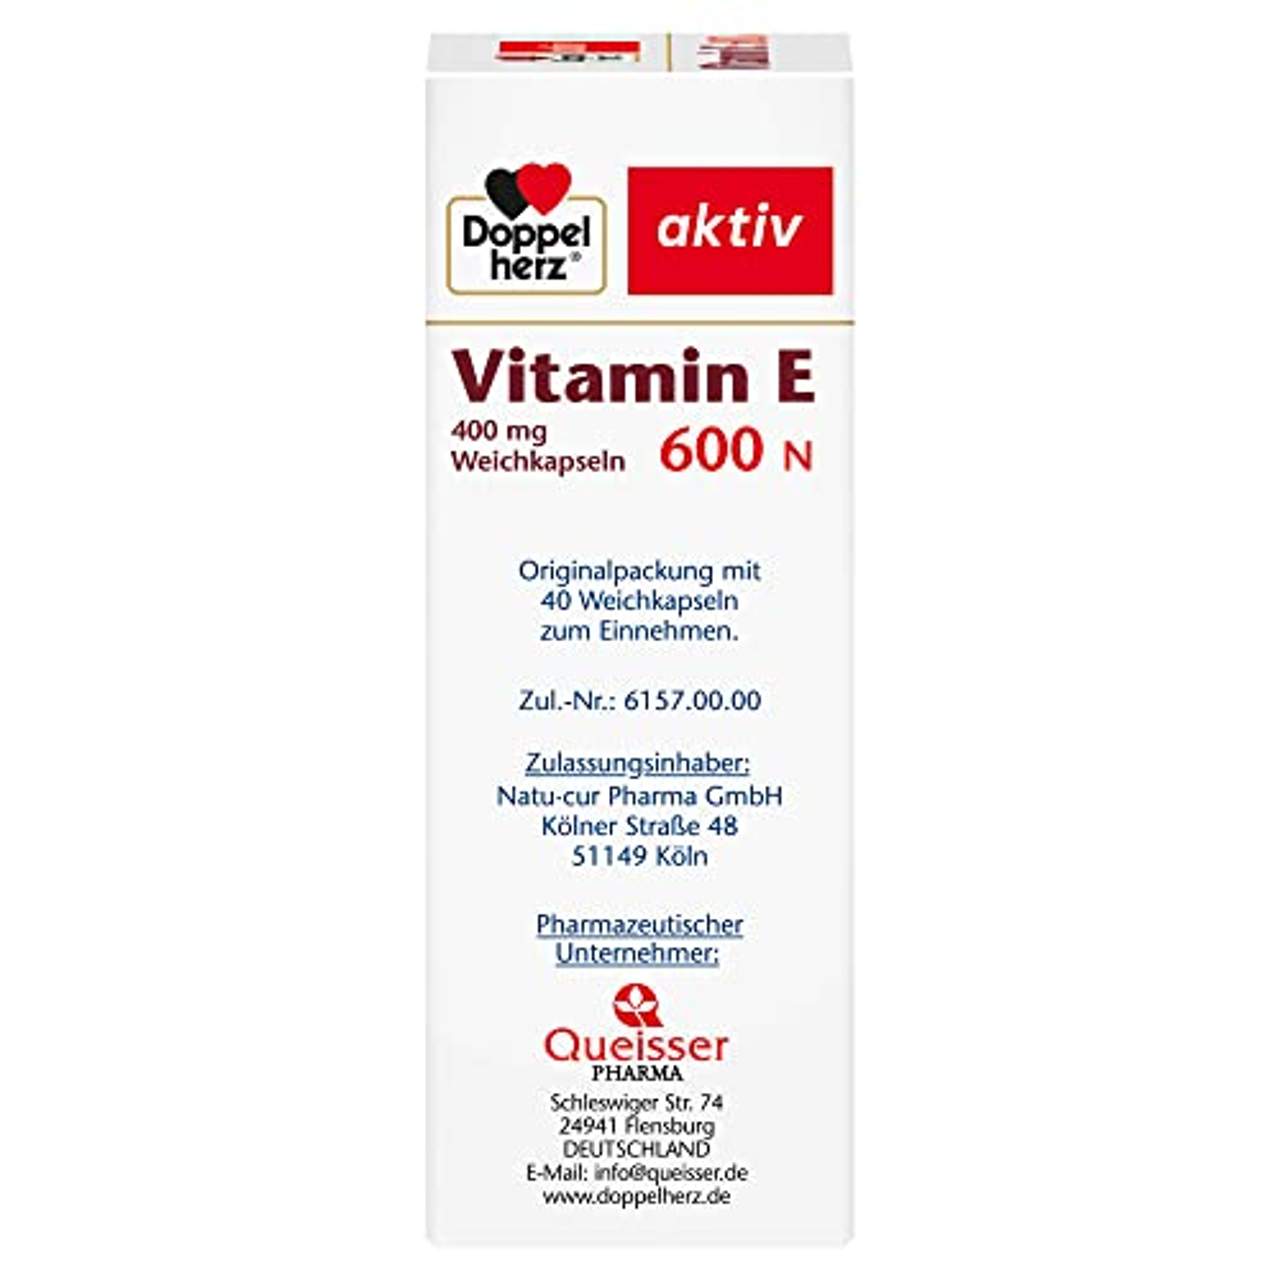 Doppelherz Vitamin E 600 N Weichkapseln